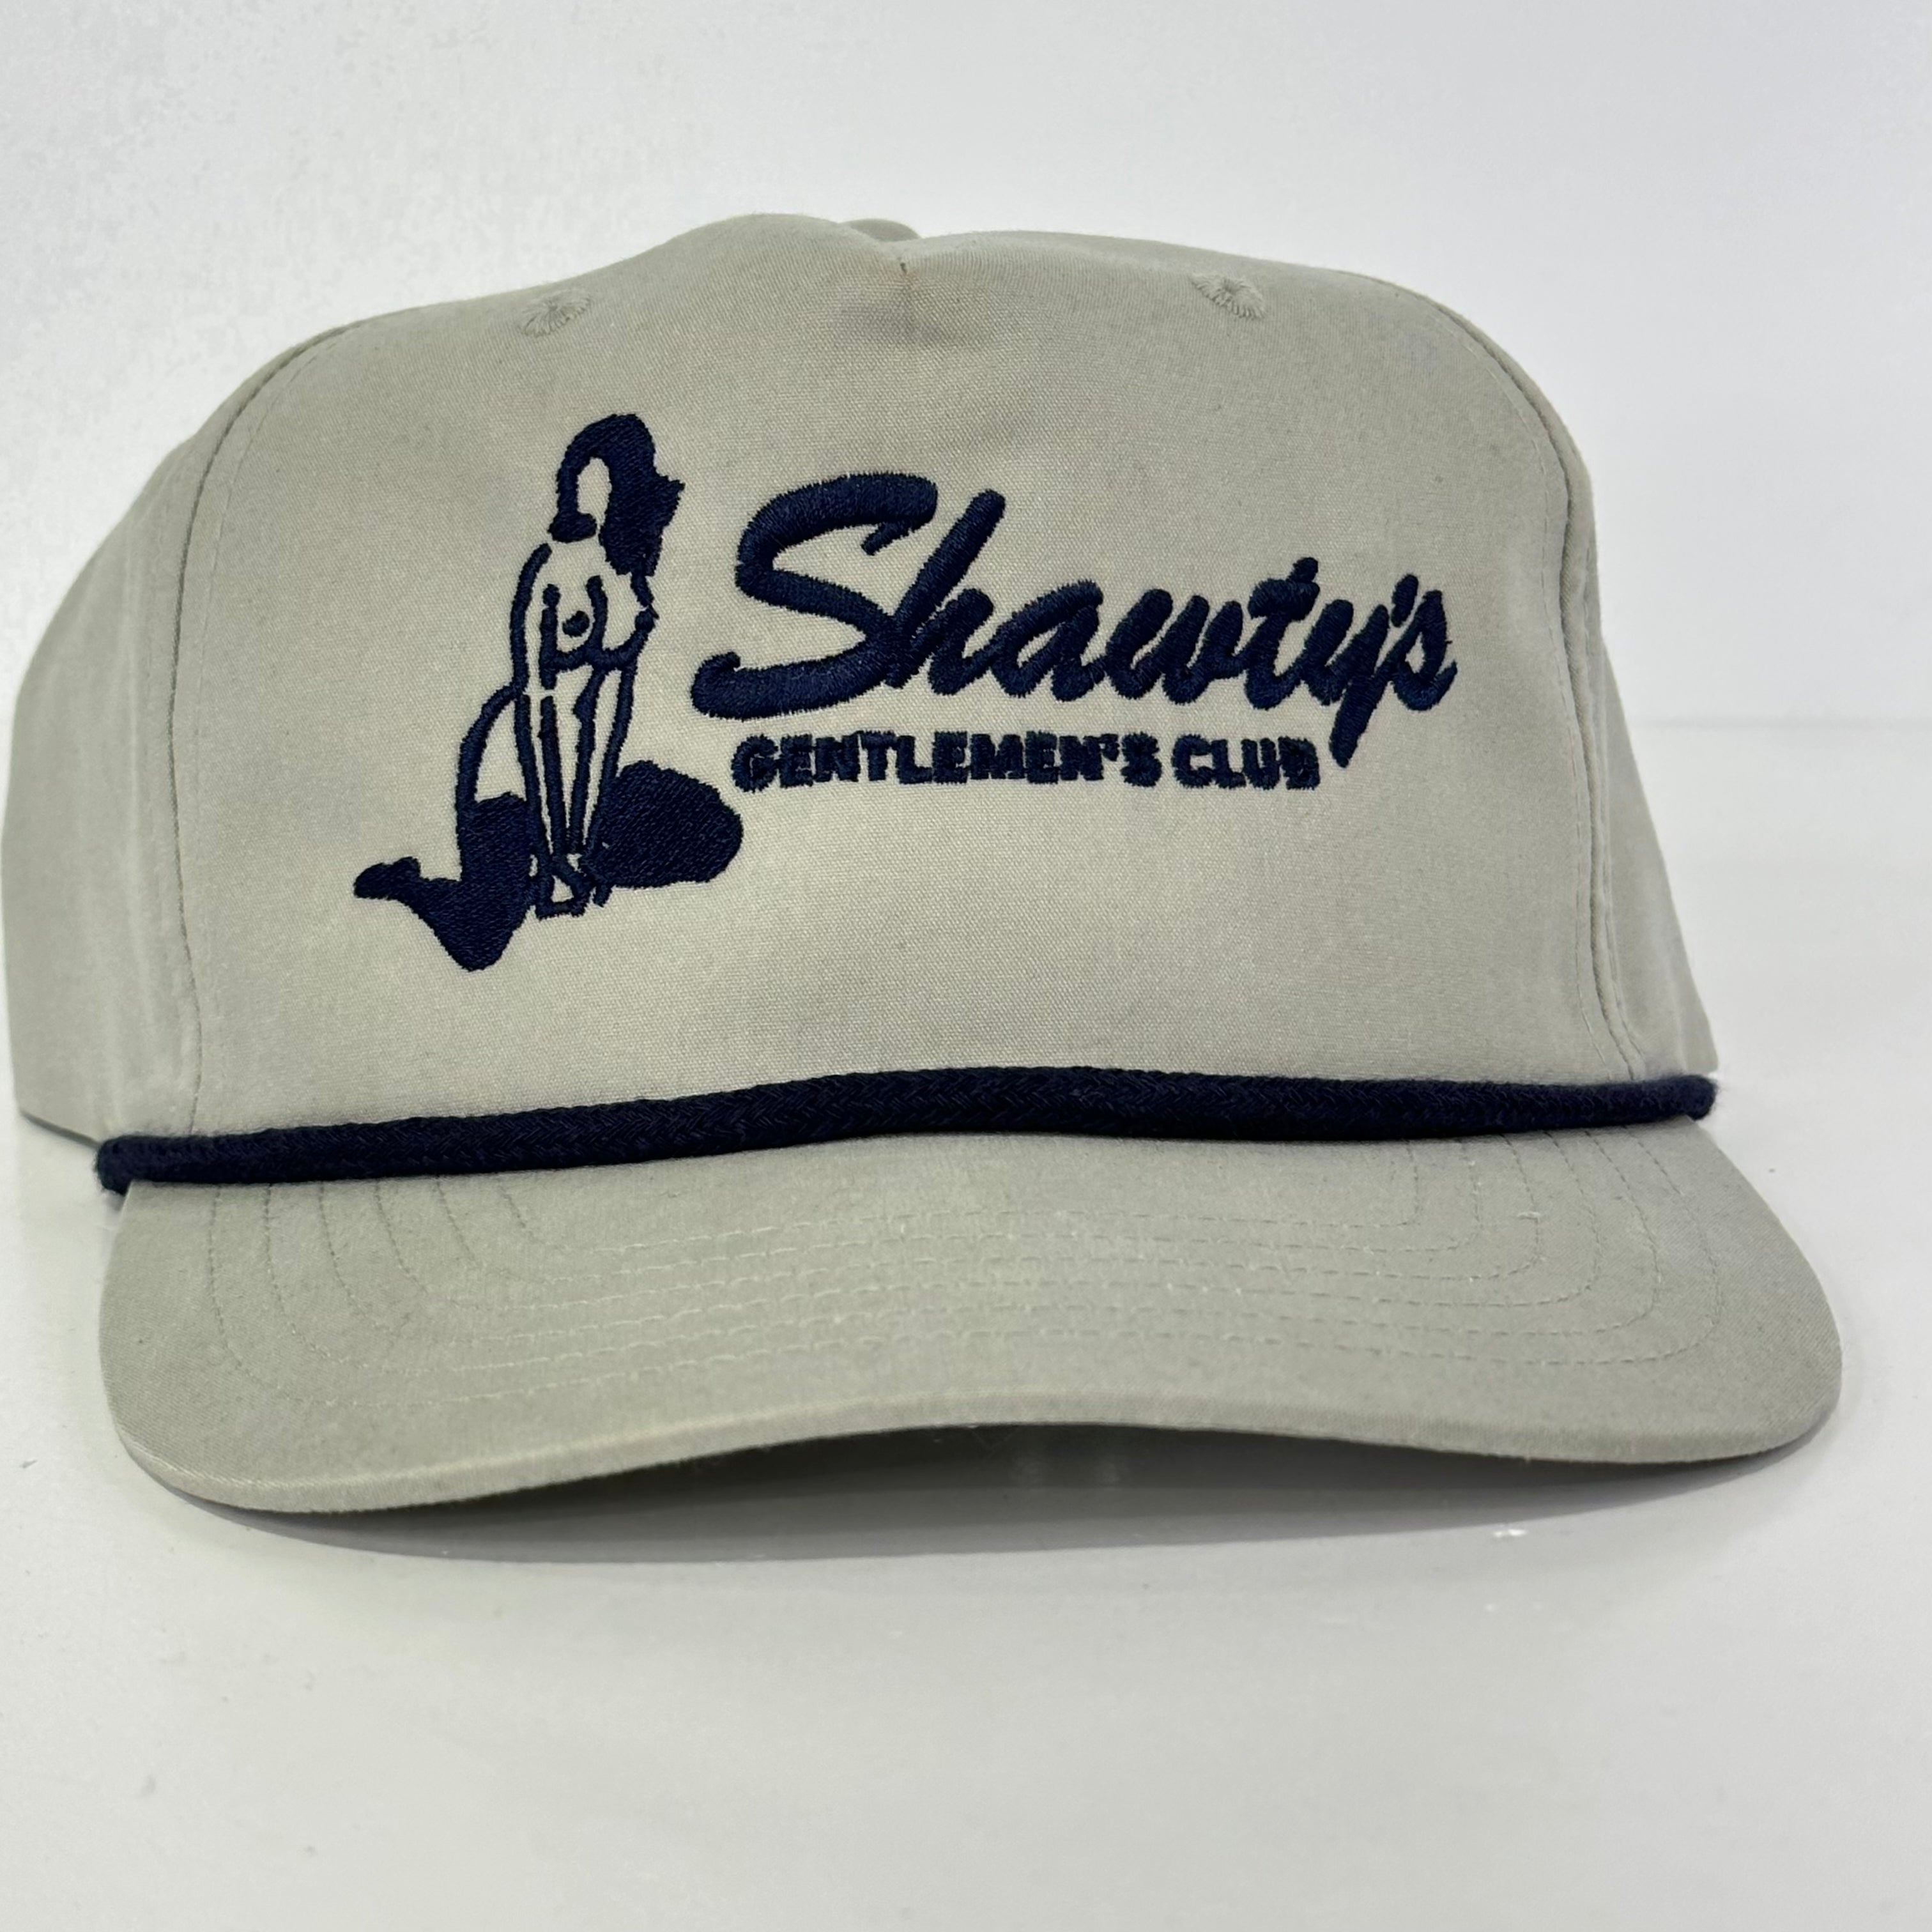 Shawtys Gentlemen Club on a gray rope SnapBack Hat Cap Collab